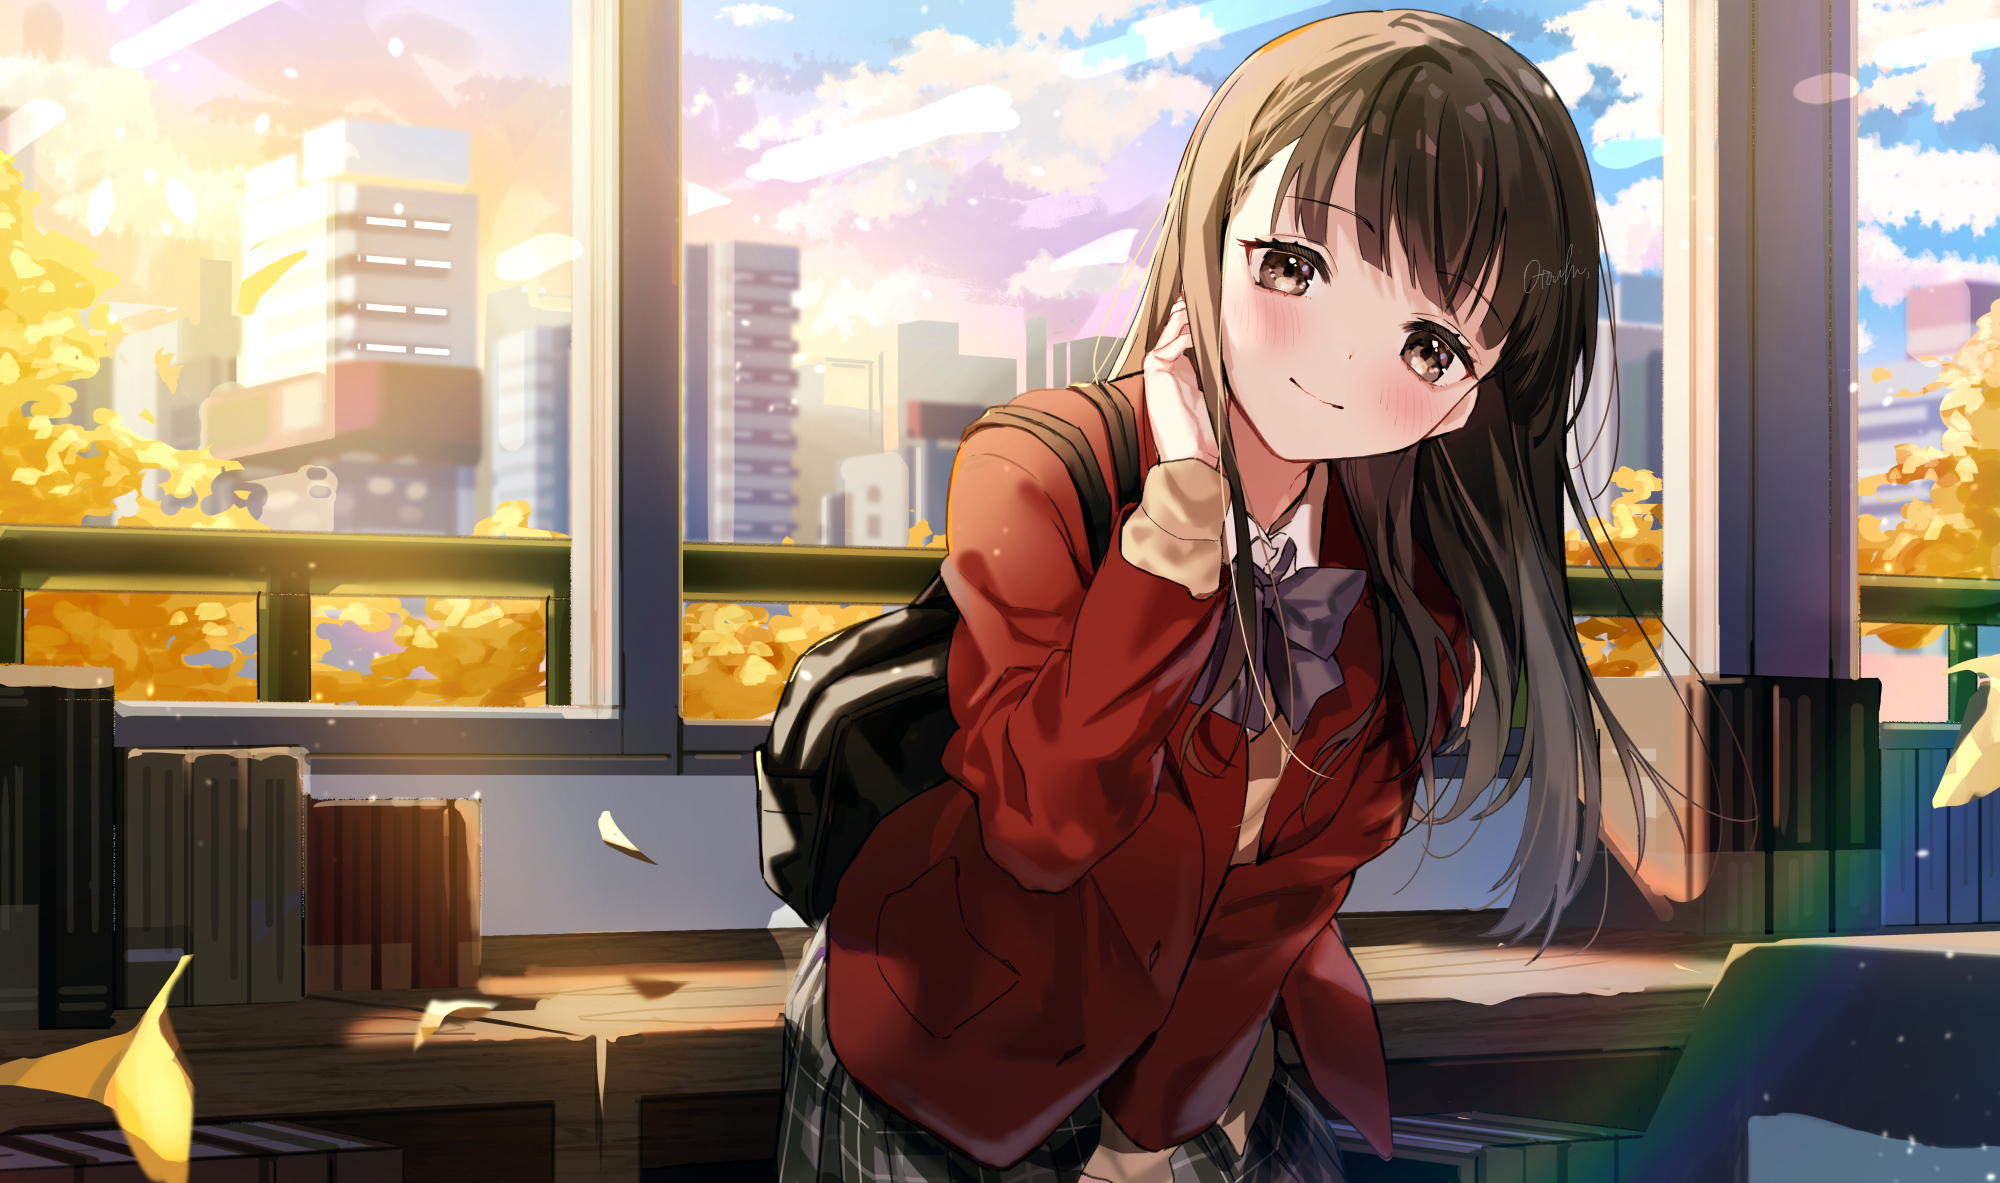 Anime 2000x1183 anime anime girls Gotouhu artwork brunette brown eyes smiling blushing school uniform fall window